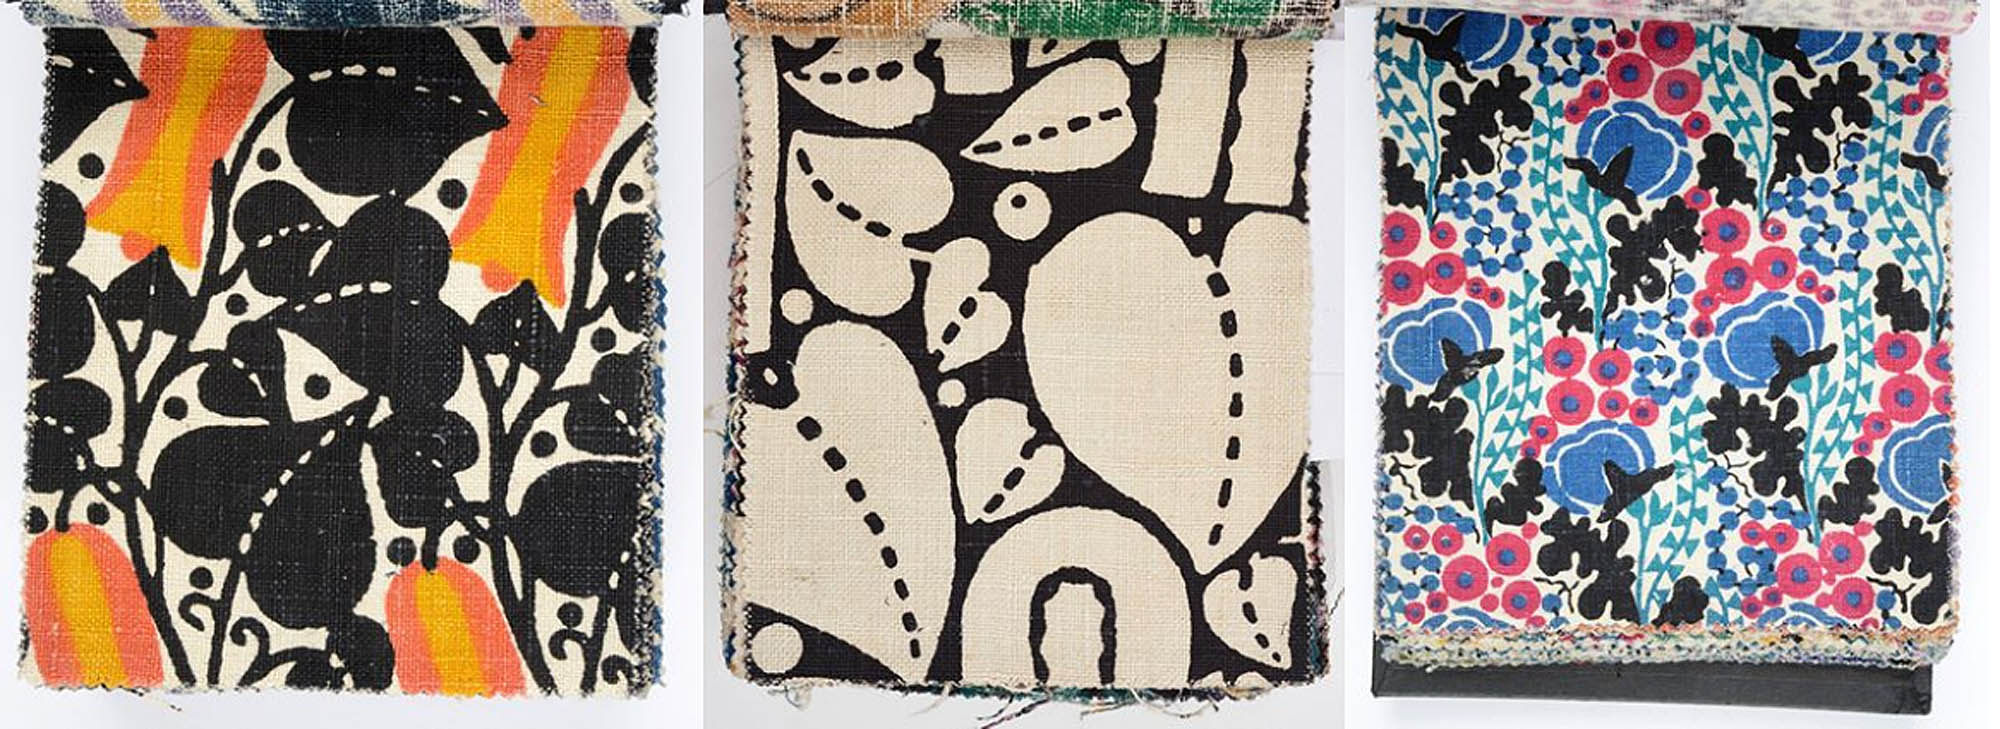 Fabric samples from Wiener Werkstatte © MAK Museum in Vienna